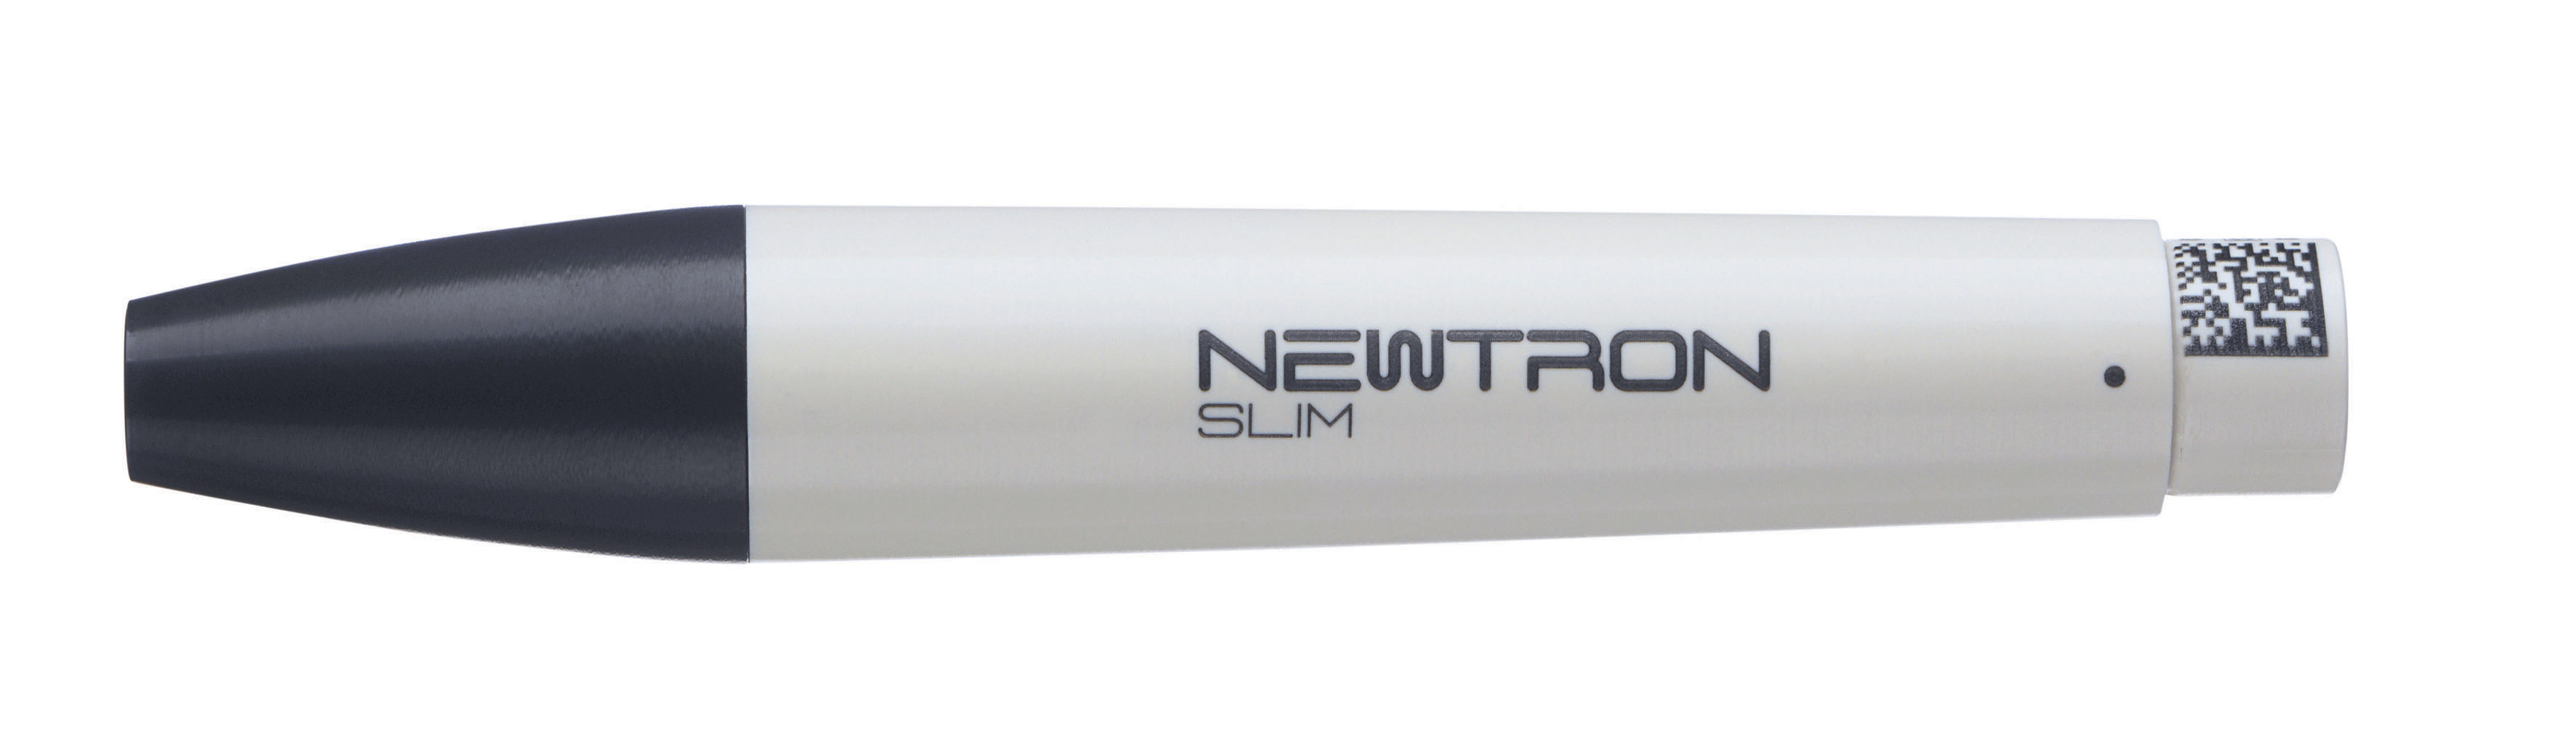 Acteon Newtron Slim, Piezon-Handstück ohne Licht  -  Kunststoffkappe | Art.Nr.: F12901